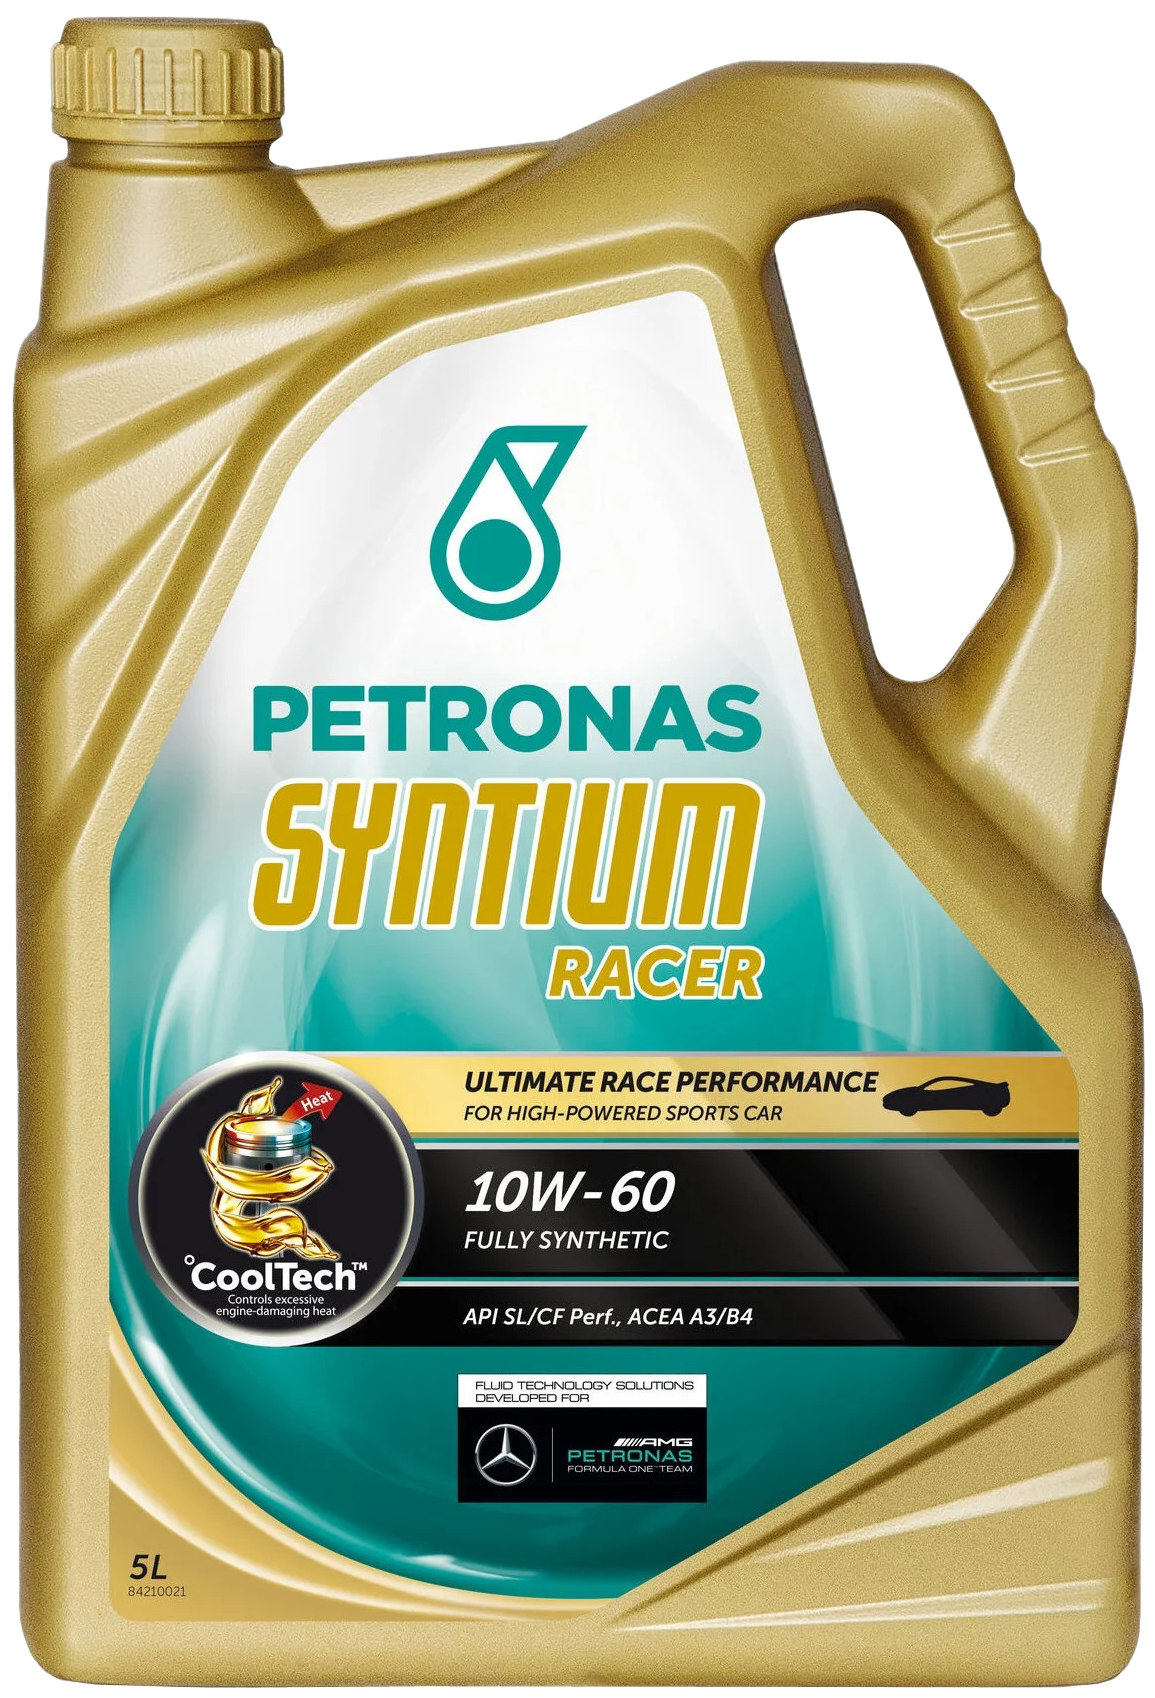 Petronas Syntium Racer 10W-60, 5 lt